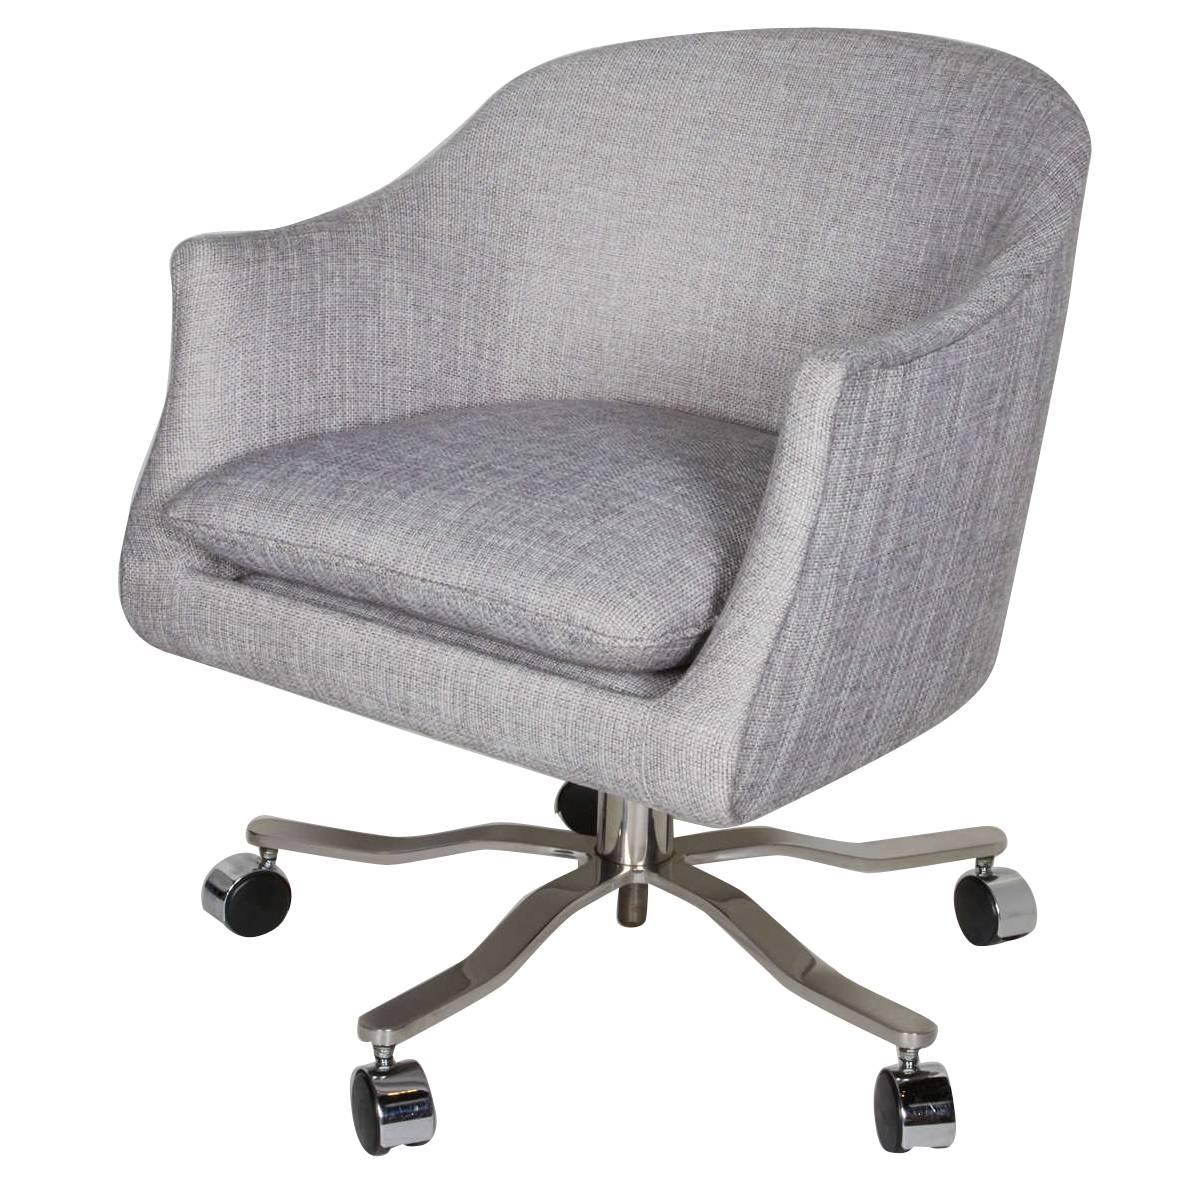 American Mid-Century Modern Swivel Desk Chair Designed by Ward Bennett